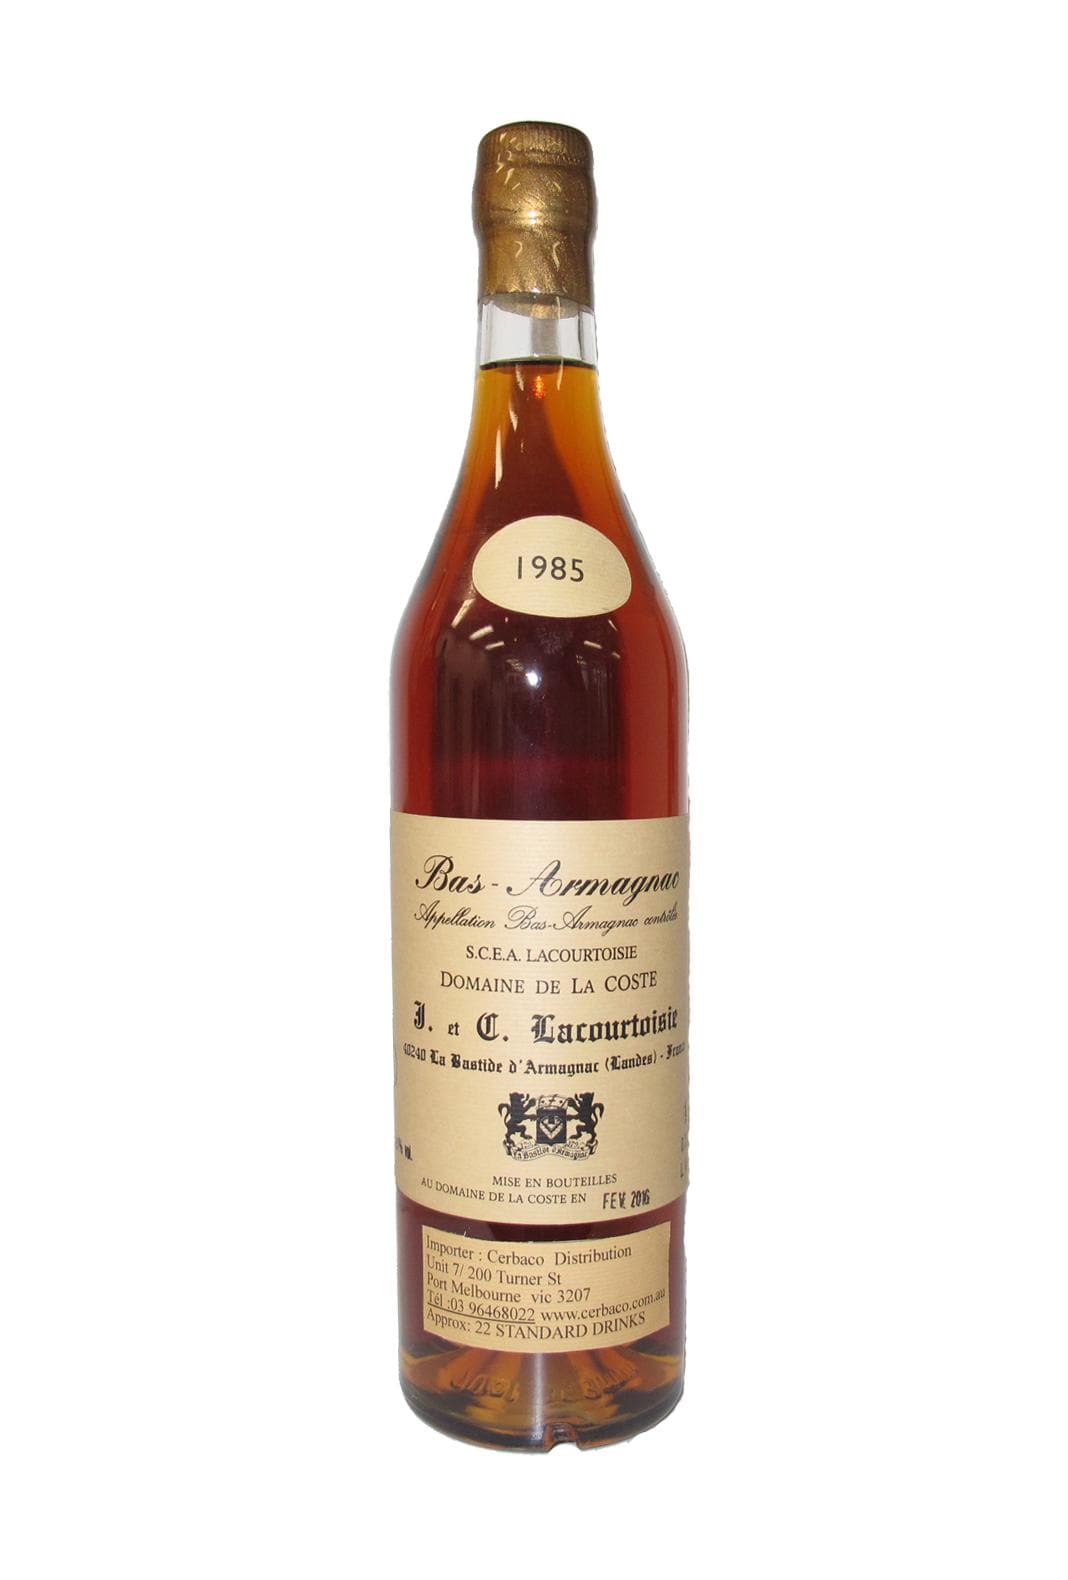 Lacourtoisie Bas Armagnac 1985 40% 700ml | Brandy | Shop online at Spirits of France